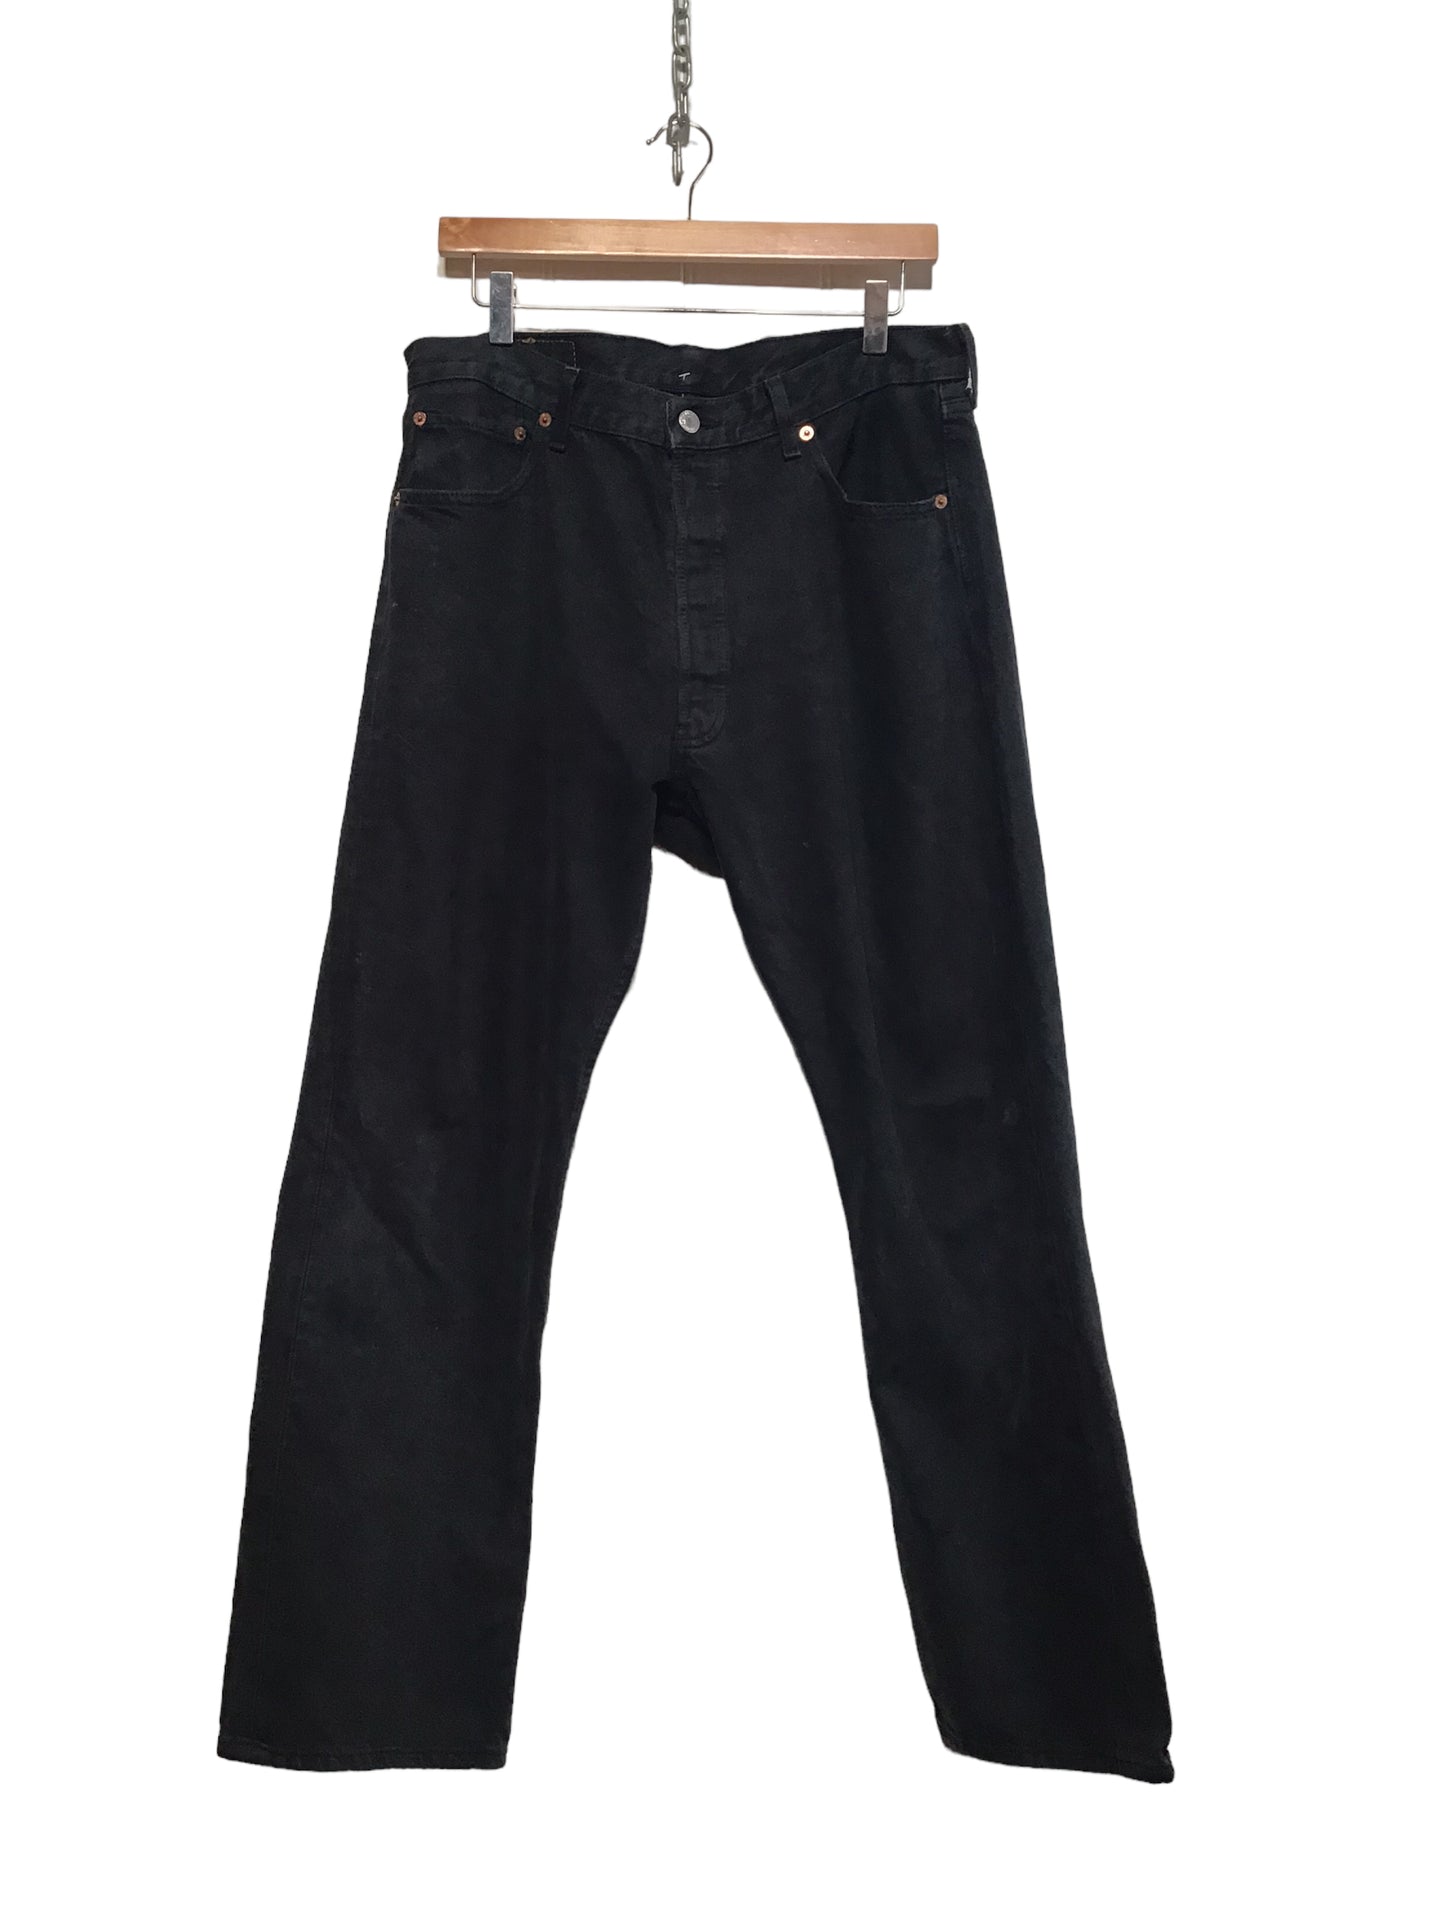 Levi’s 501 Black Jeans (36x30)